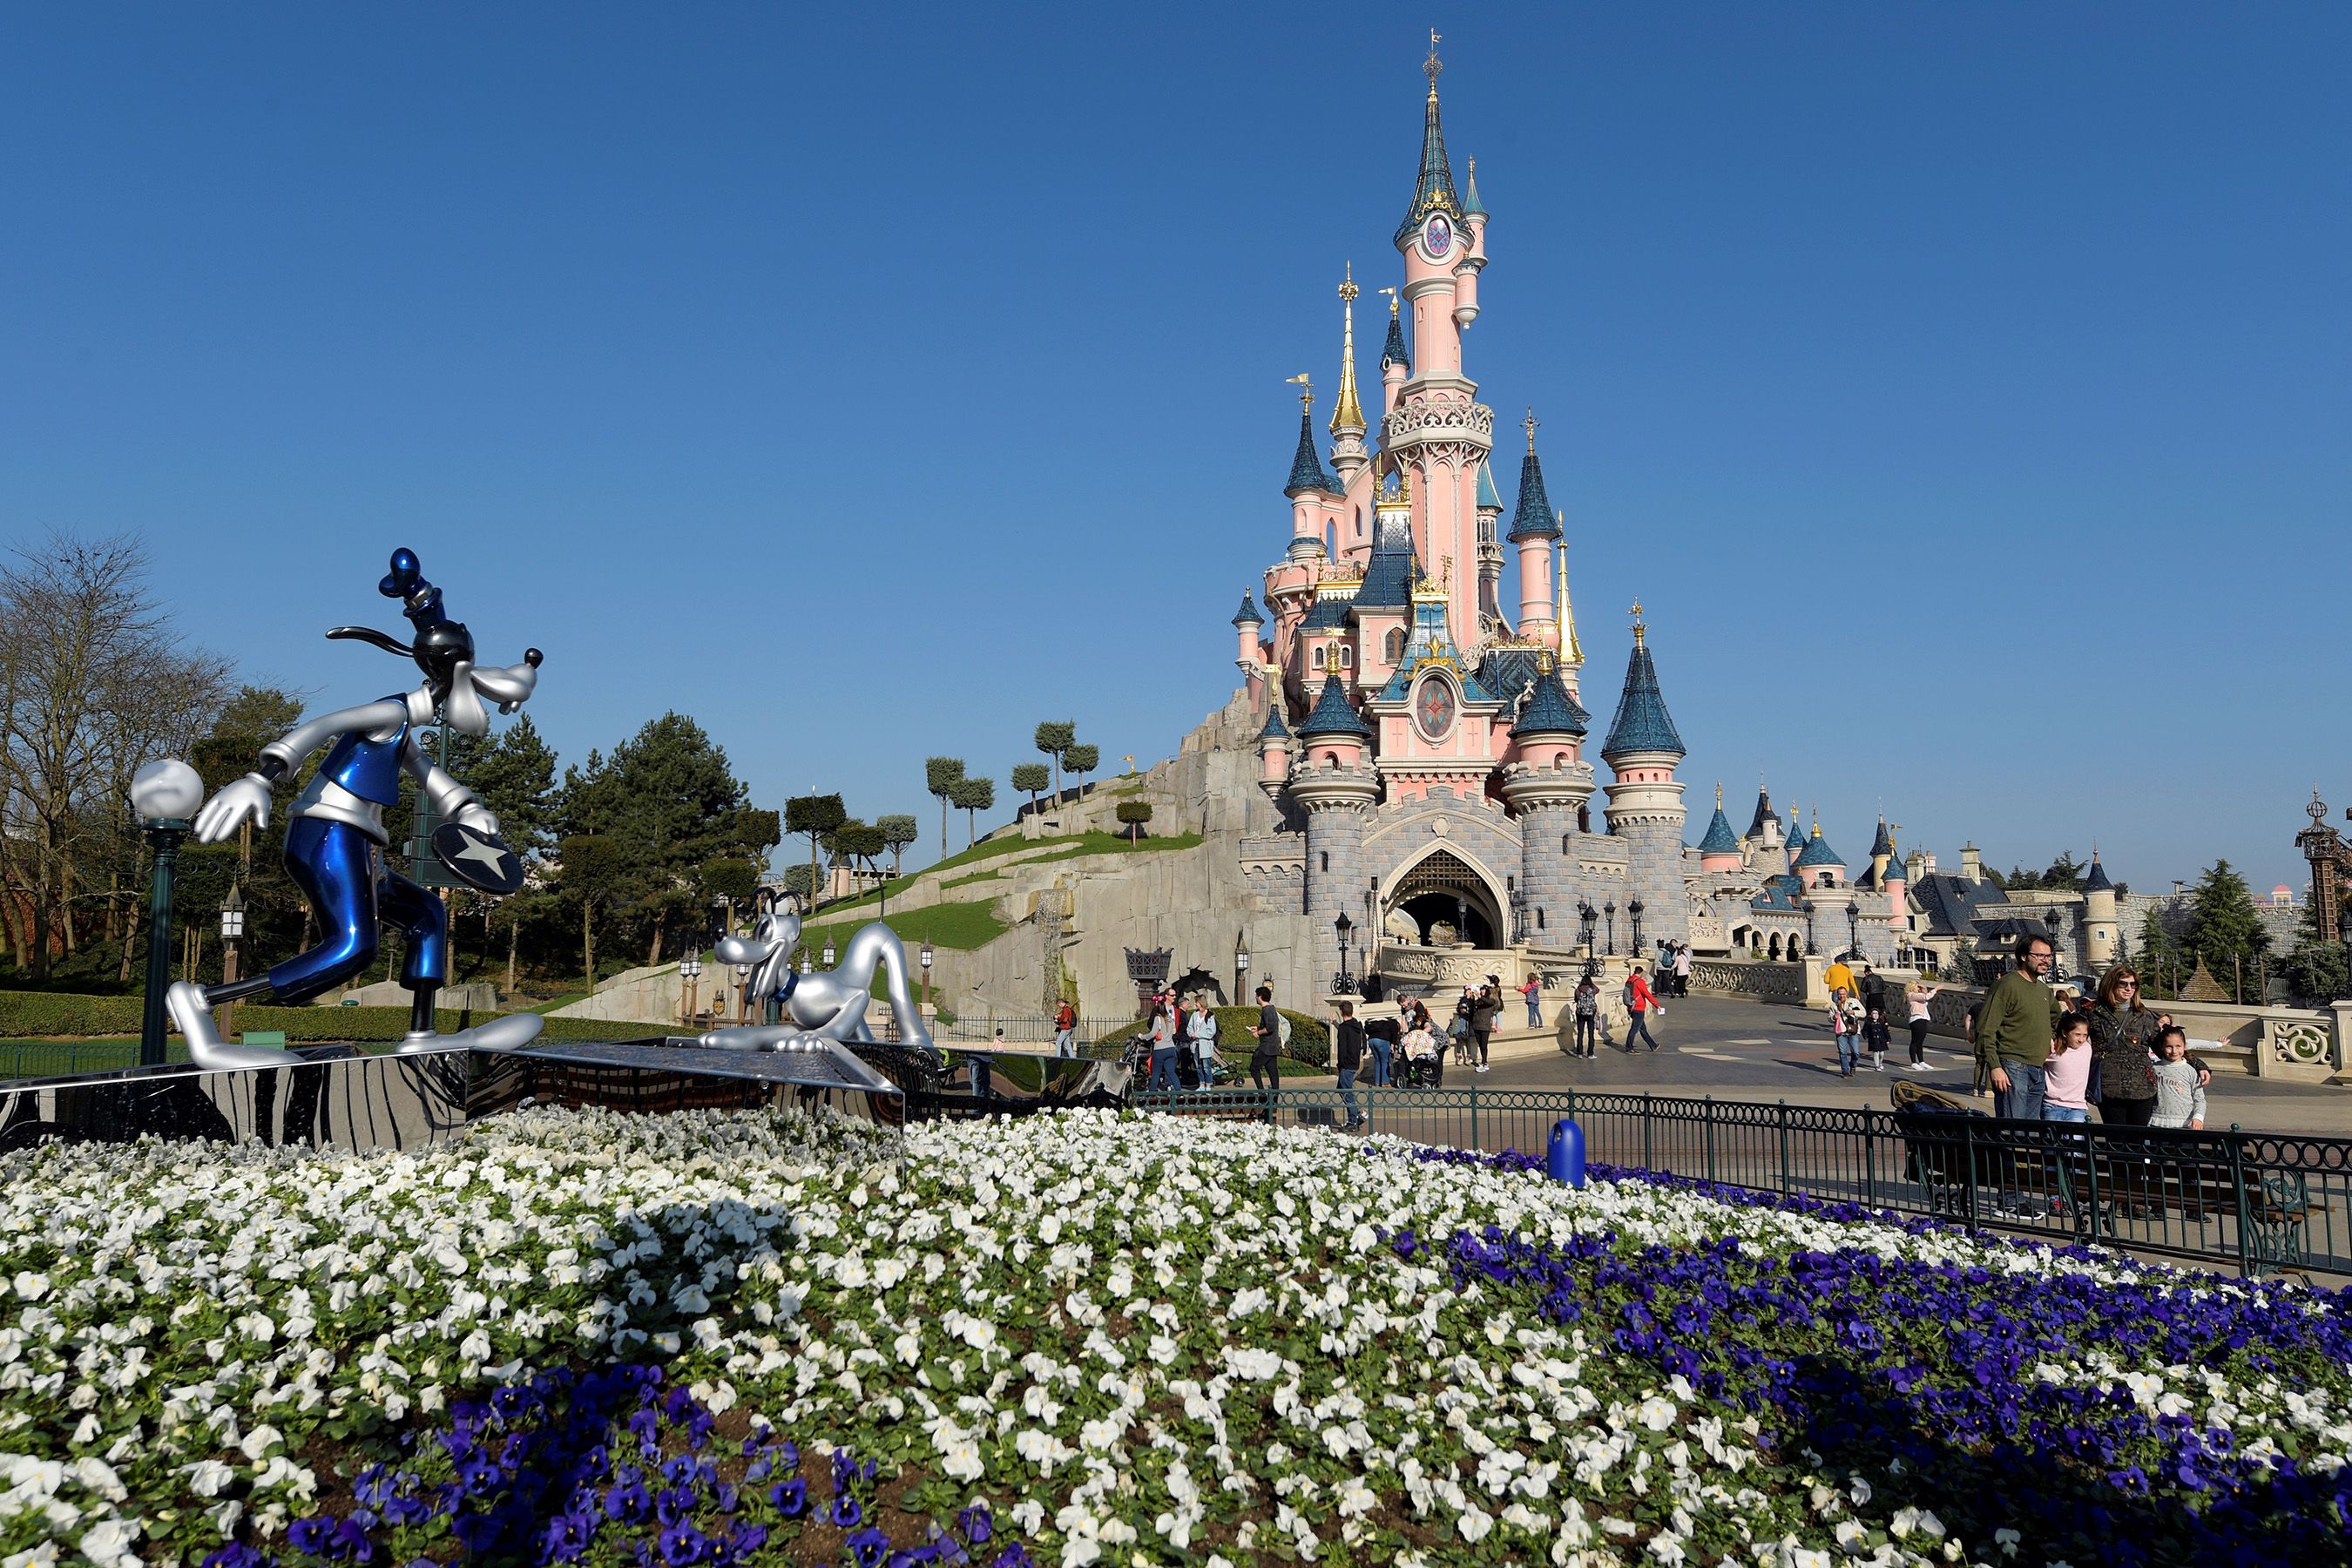 The nearest hotels to Disneyland Paris within walking distance